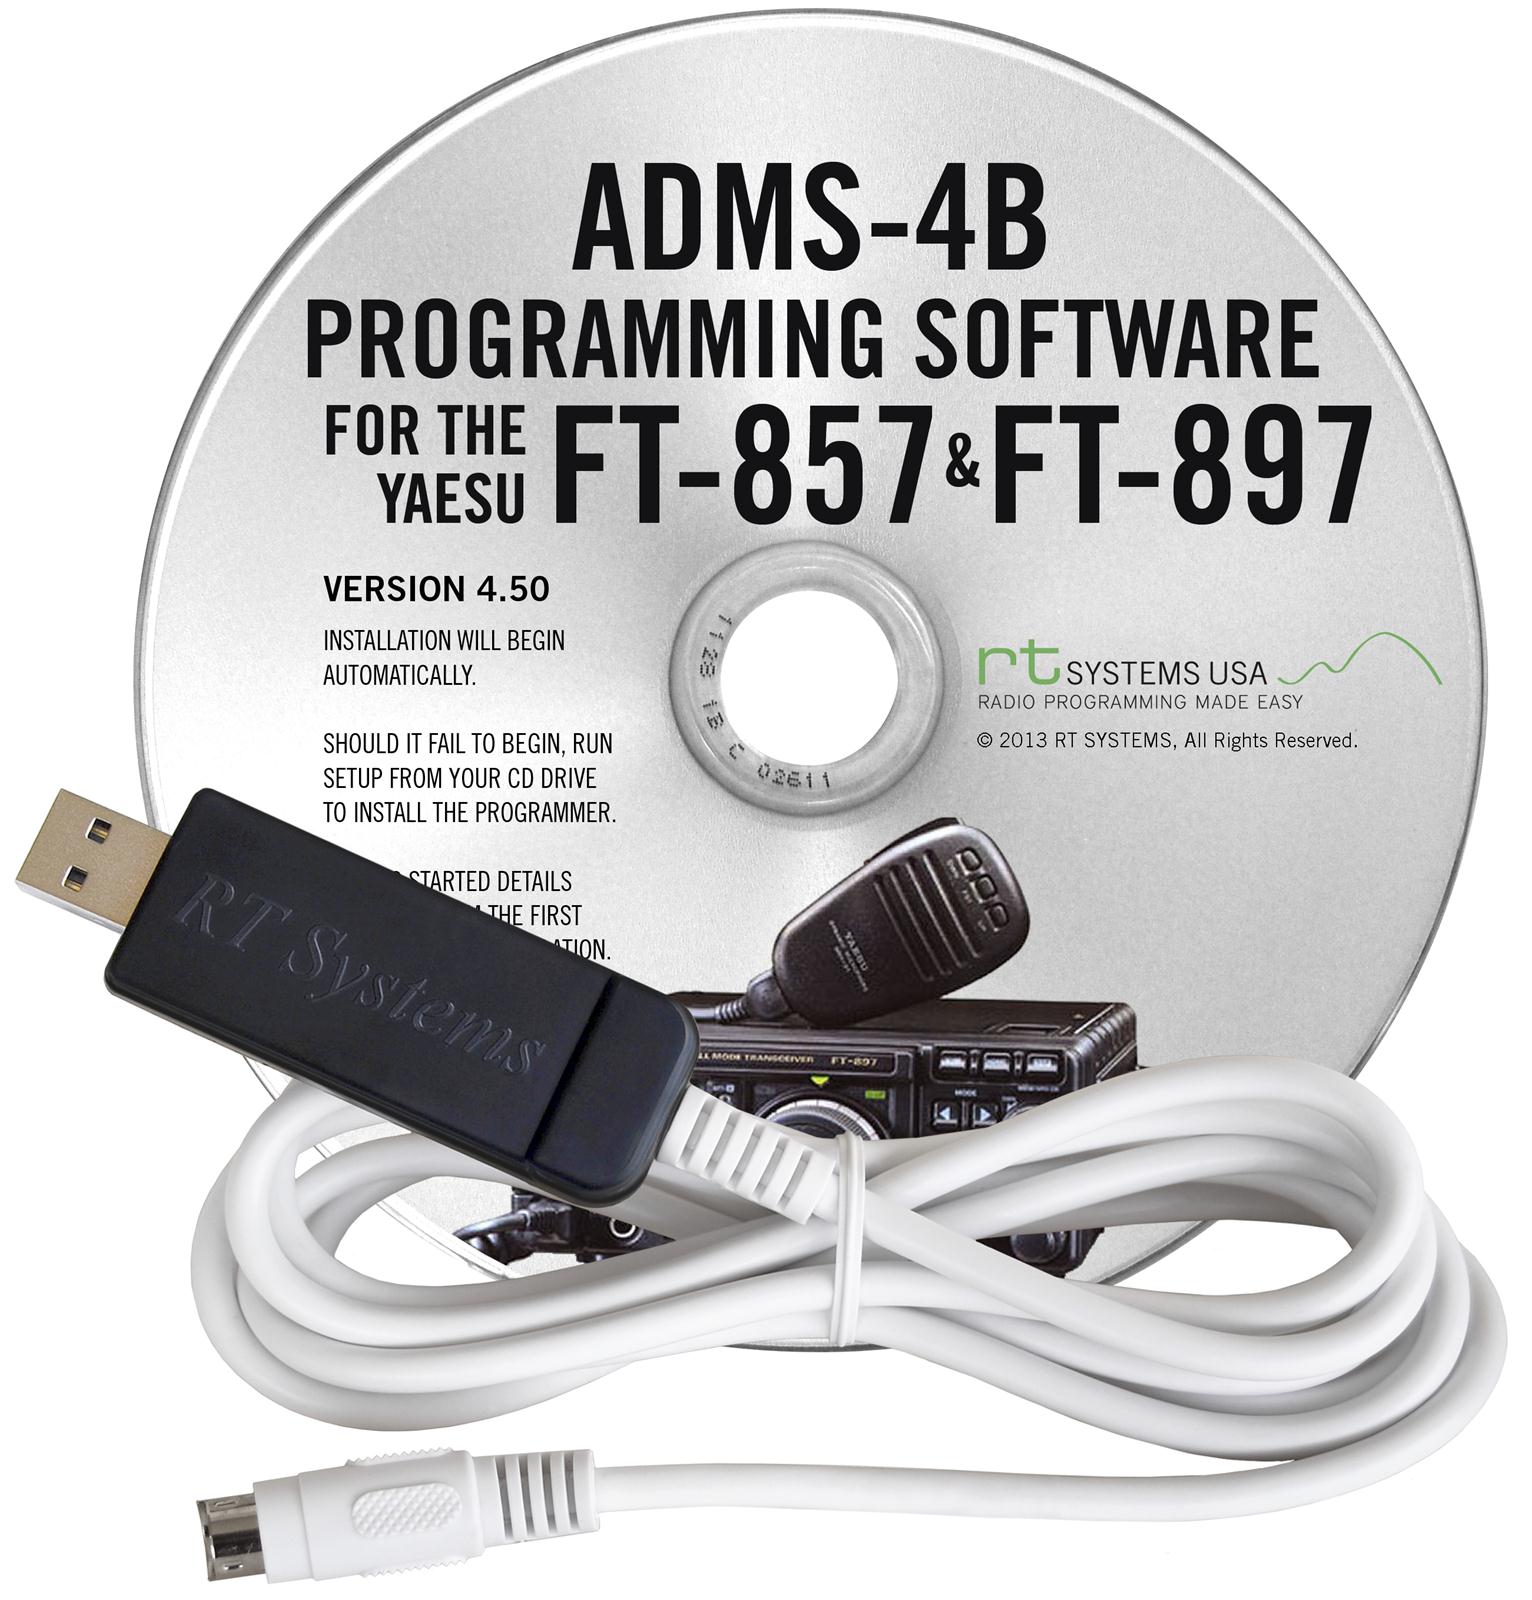 adms-4b programming software